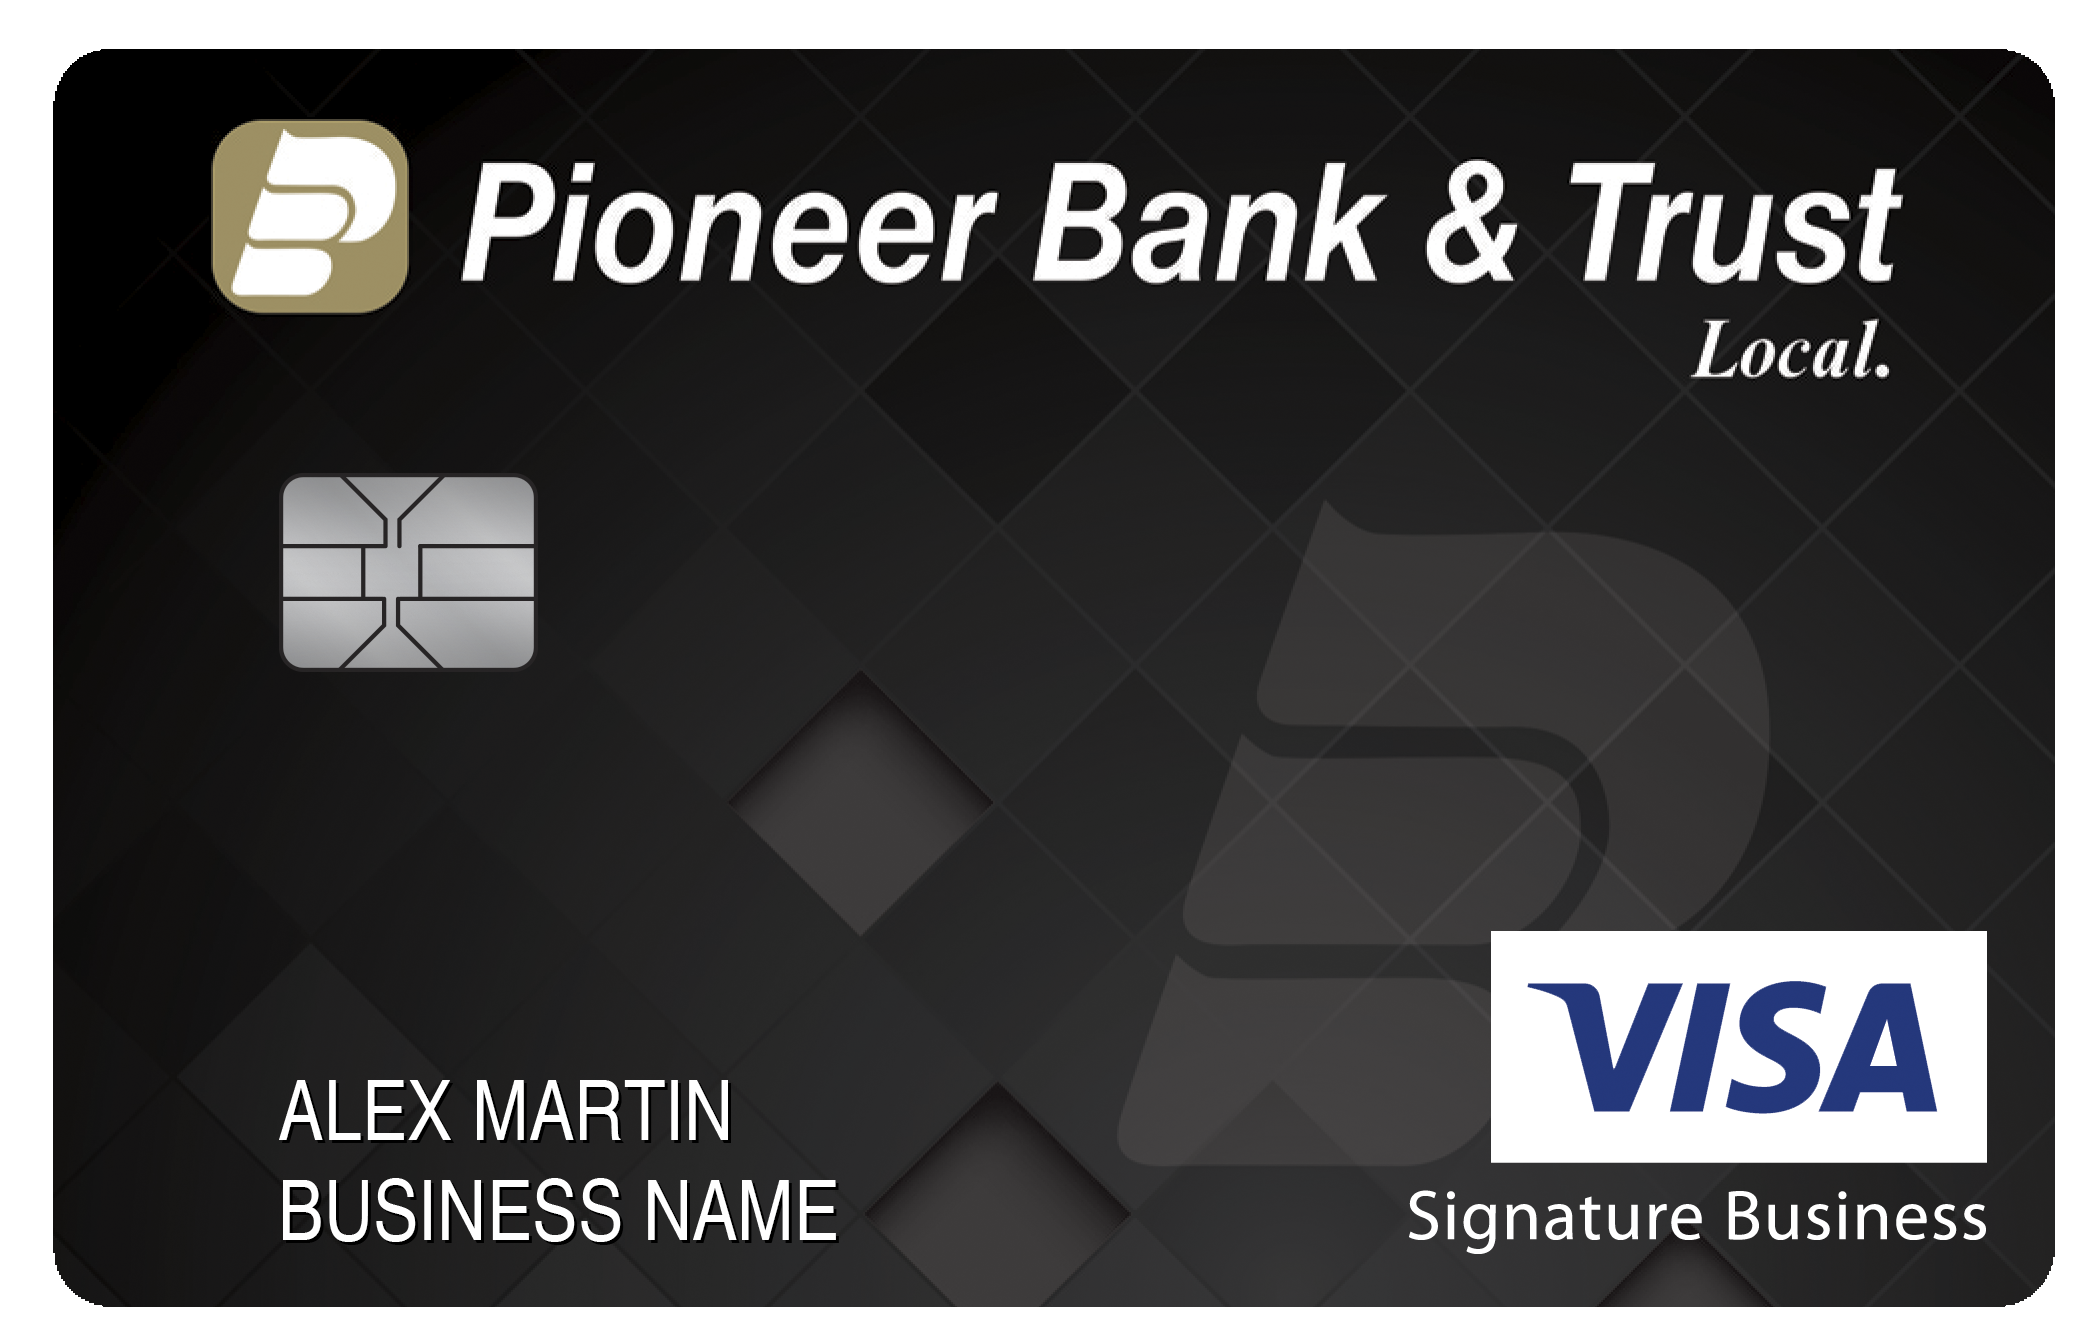 Pioneer Bank & Trust Smart Business Rewards Card